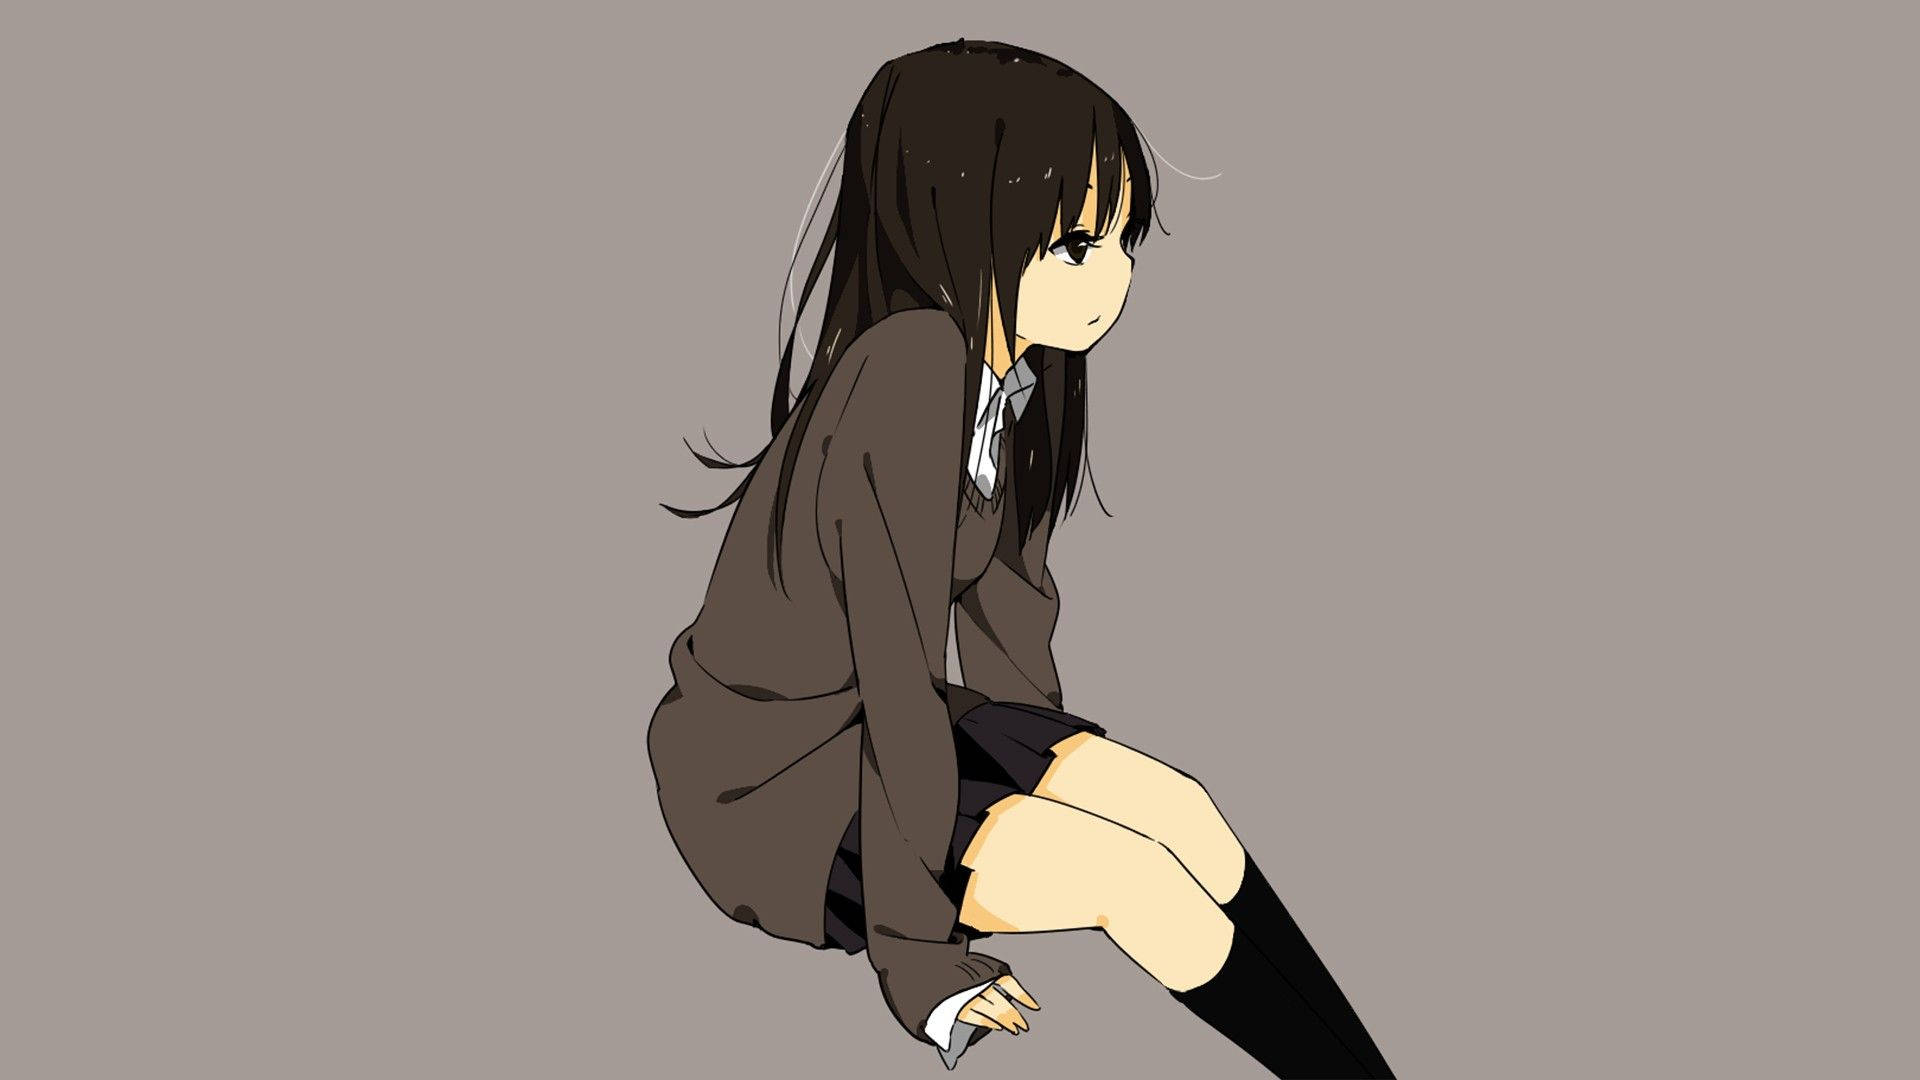 Sad Anime Girl In Grey Aesthetic Background